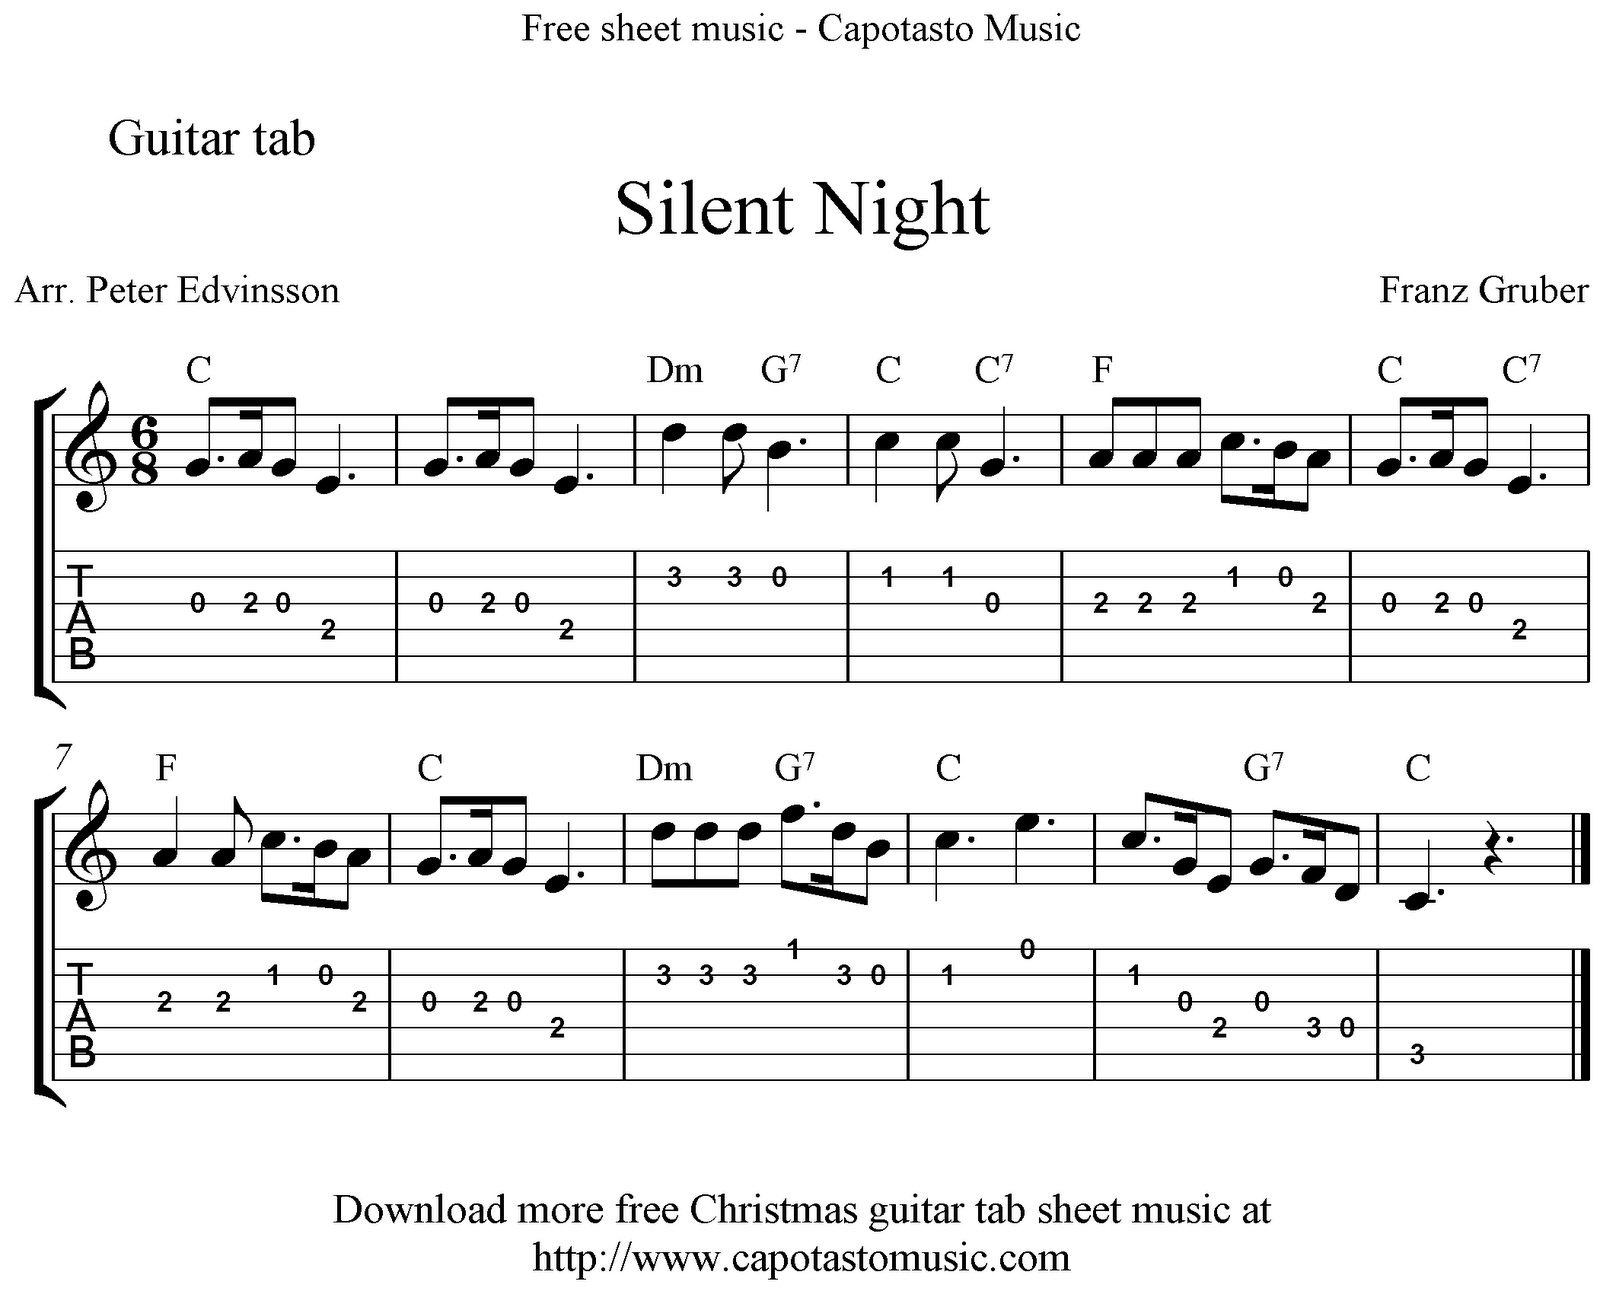 Silent Night, Easy Free Christmas Guitar Tab Sheet Music - Free Printable Guitar Tabs For Beginners